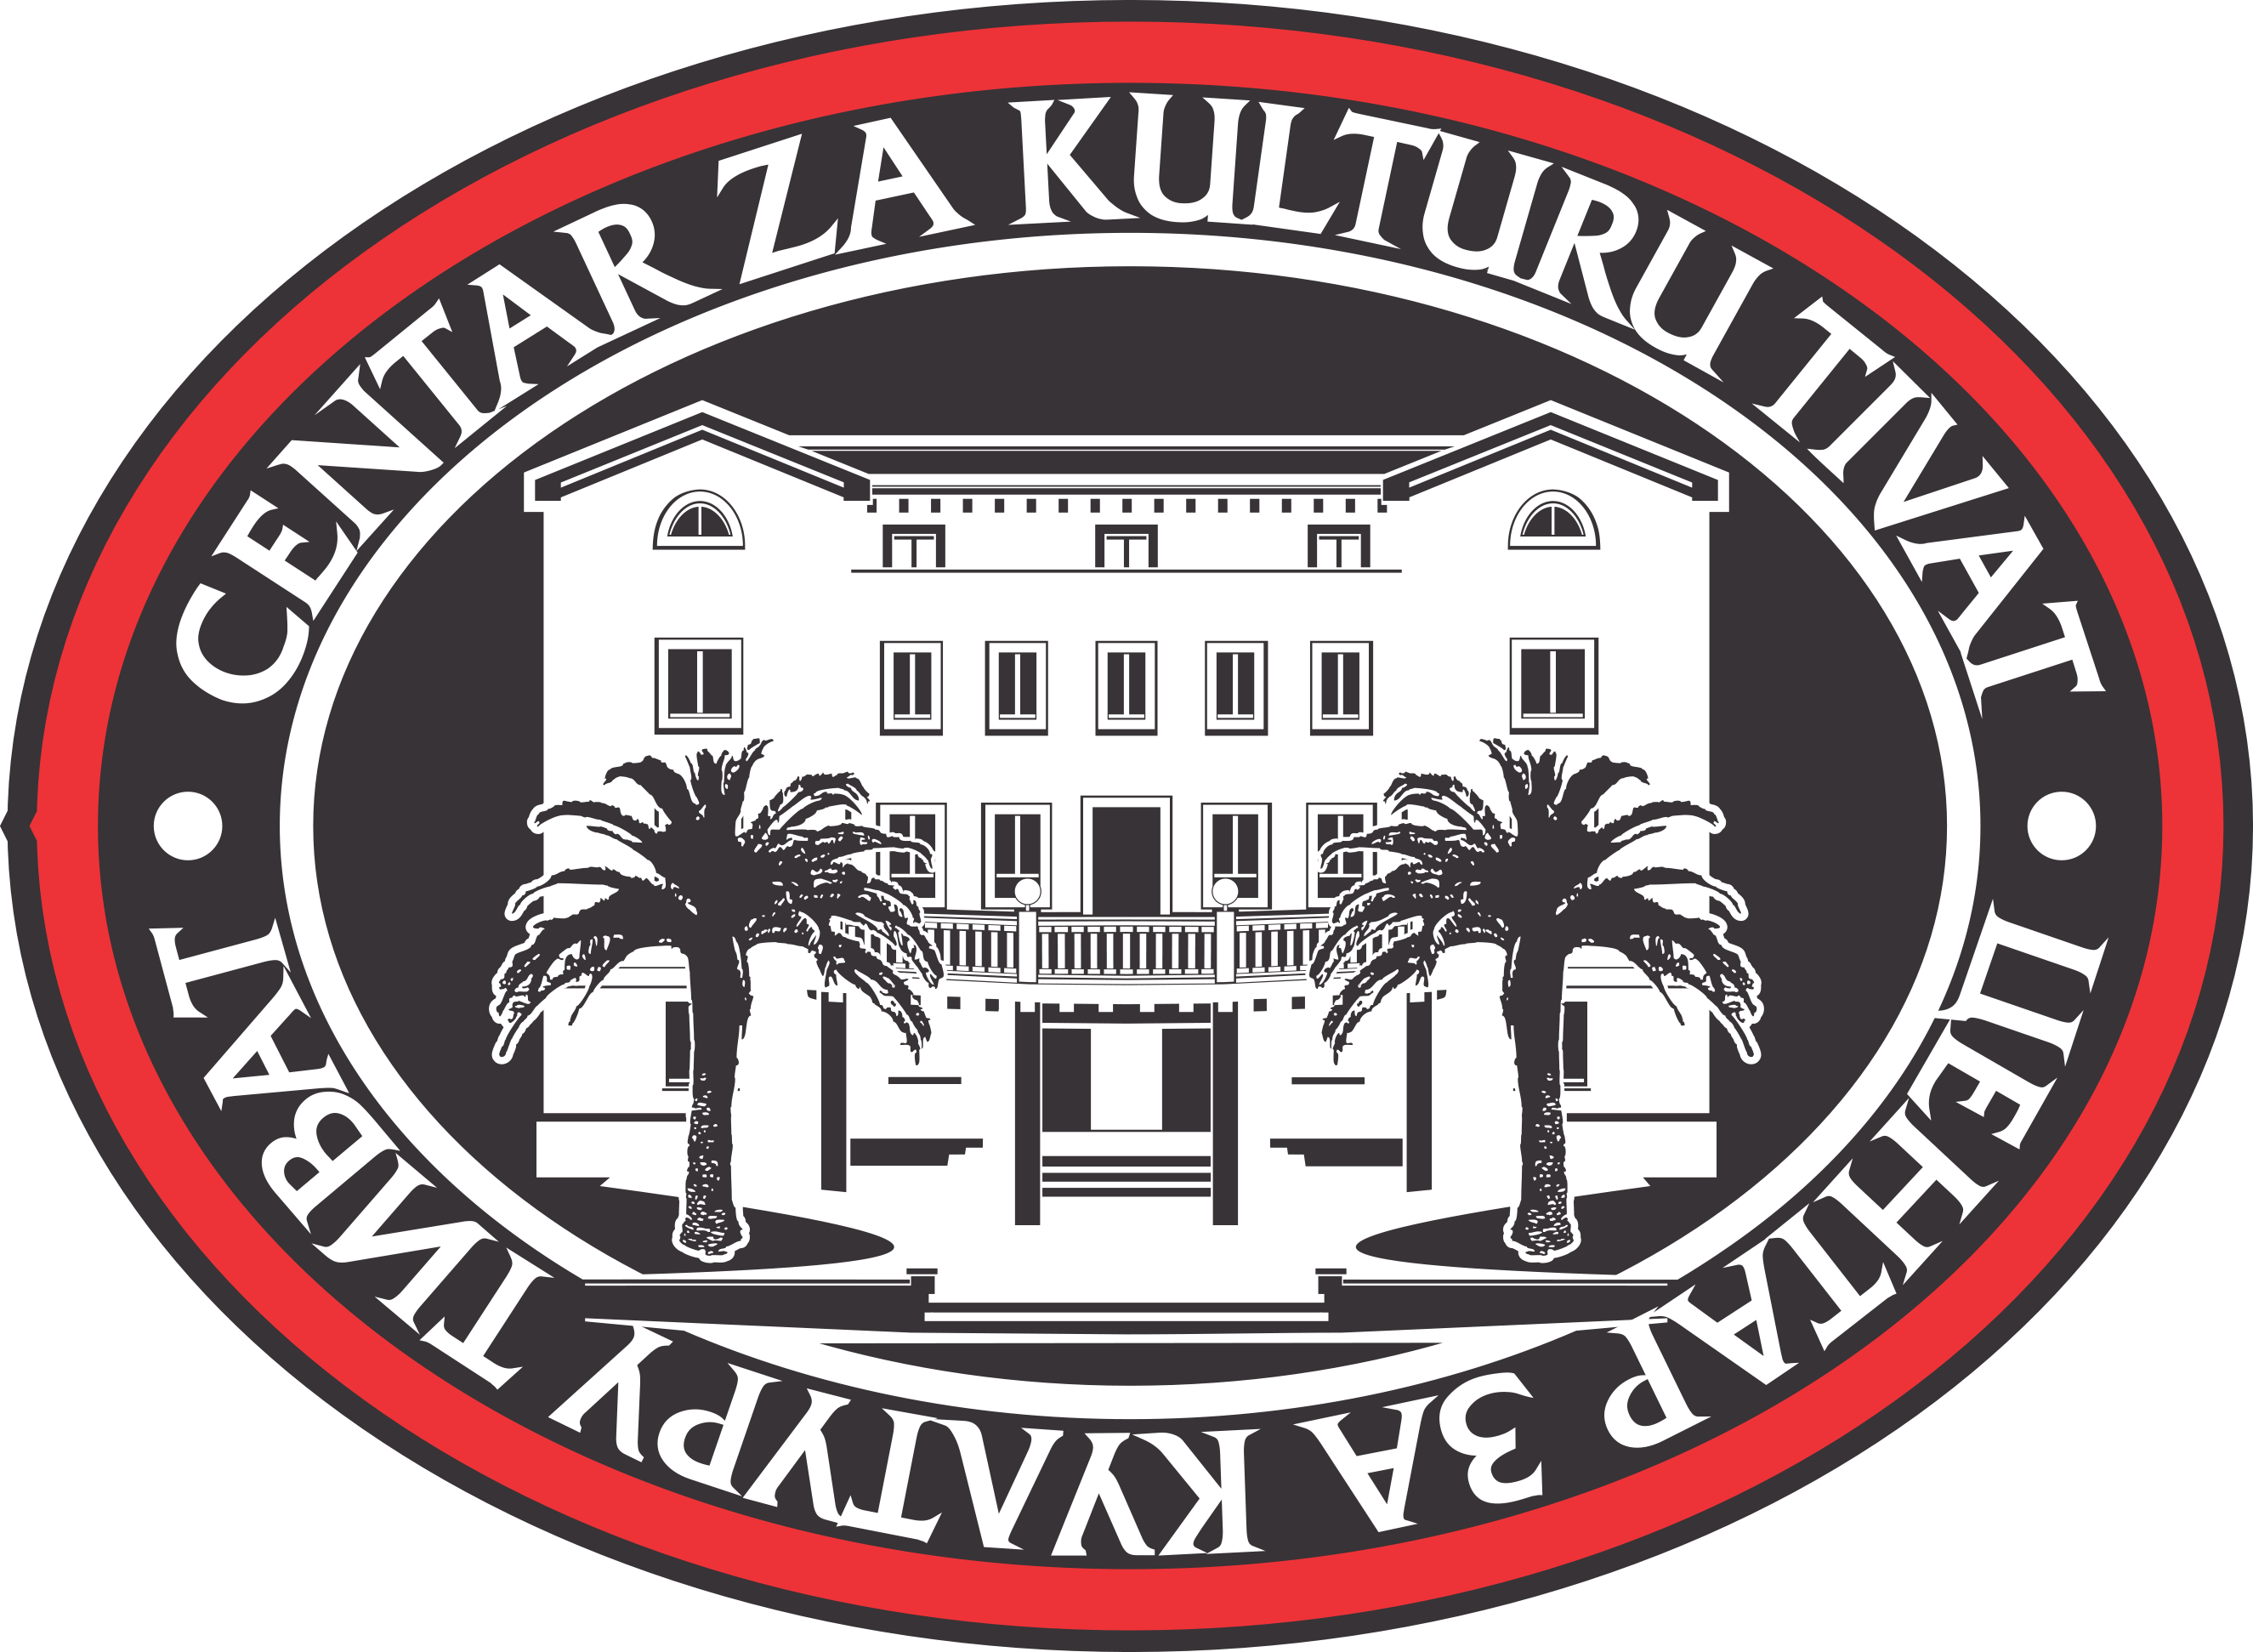 Centar za kulturu Tivat